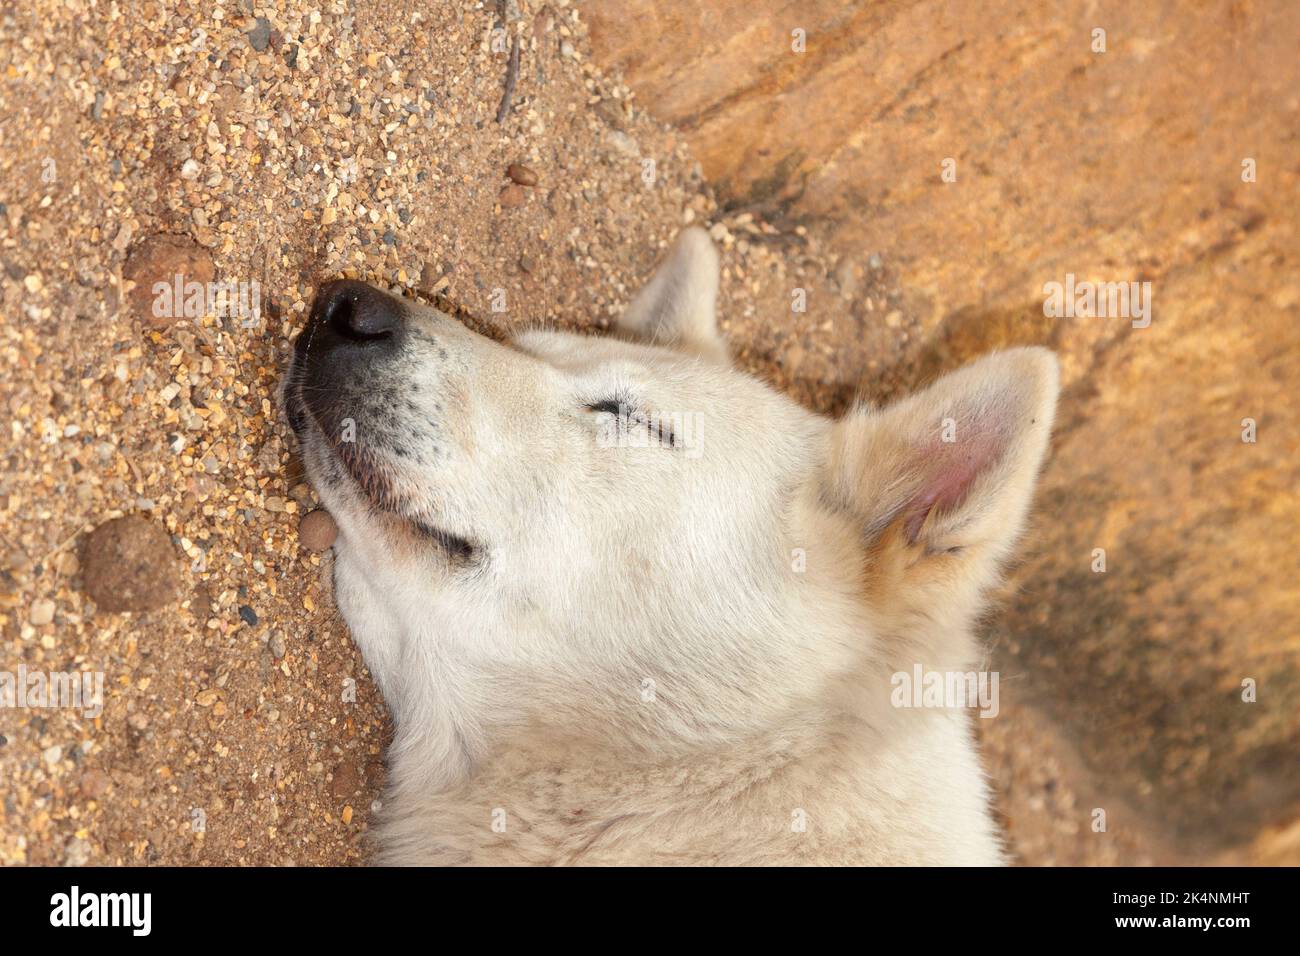 Killed dog at Dog Festival in Yulin, Guangxi province, China Stock Photo